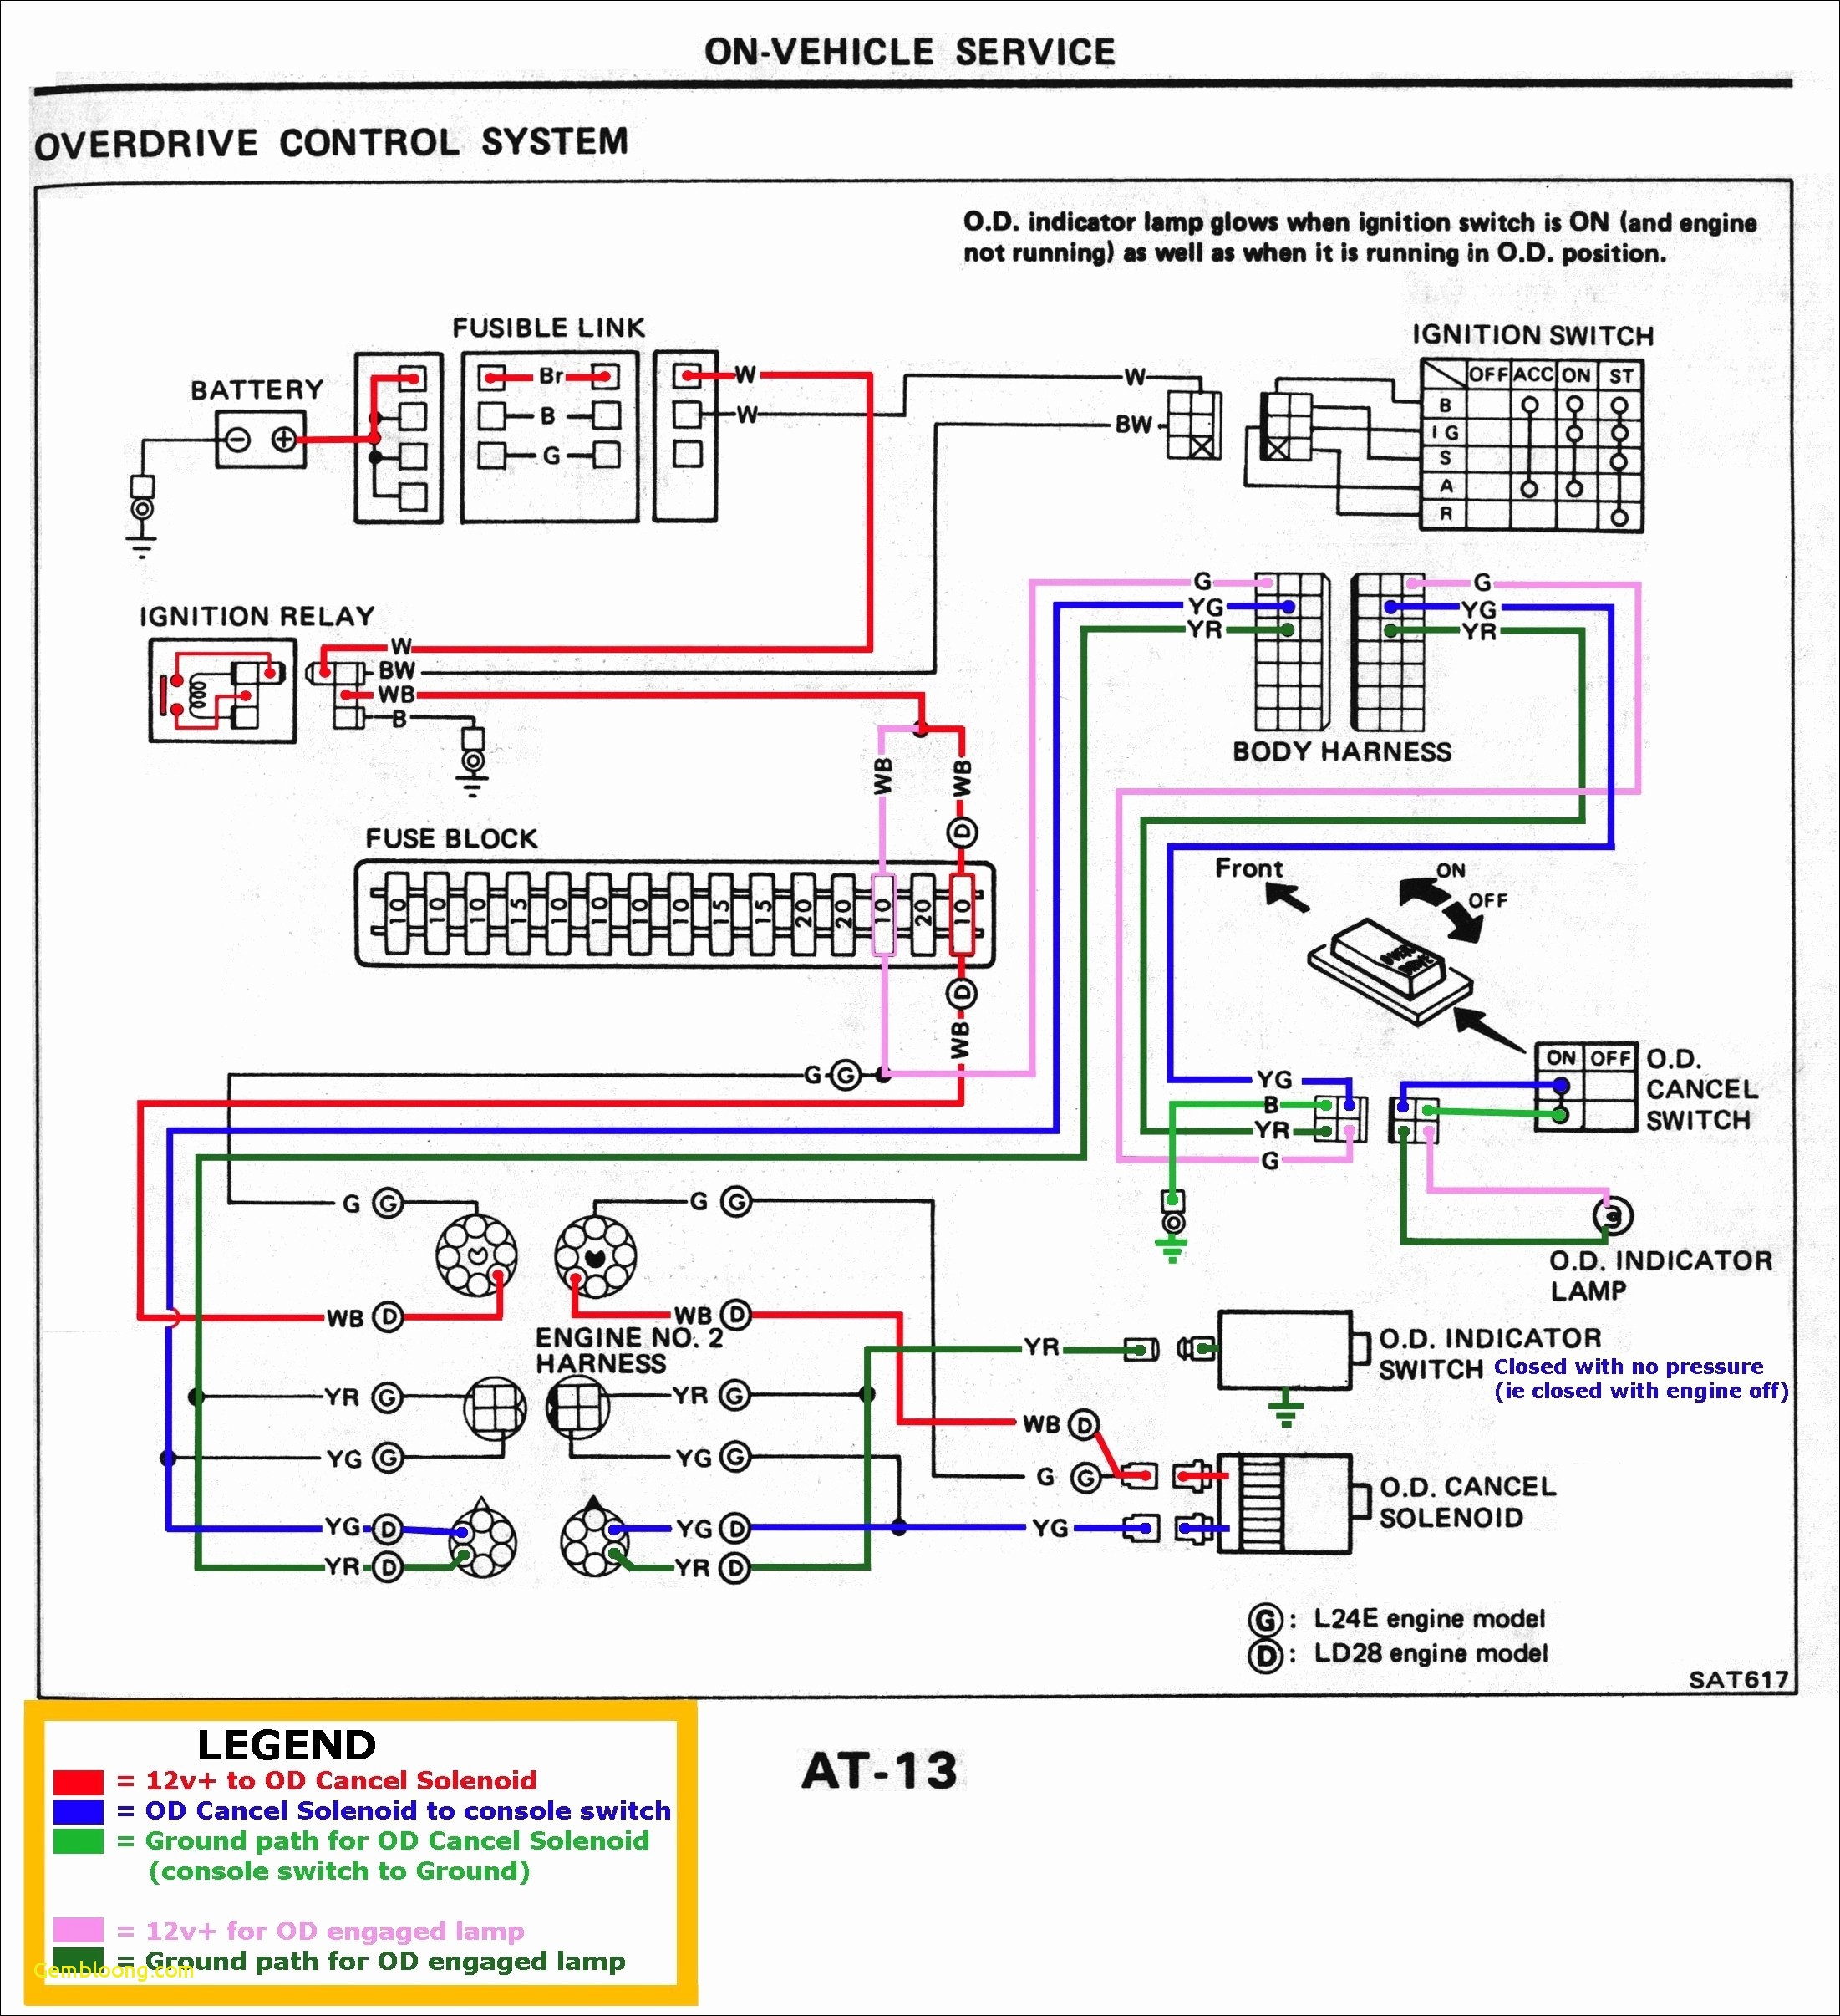 Honda Cb750 Wiring Diagram 40 2001 Honda Shadow Spirit 750 Wiring Diagram Download – Wiring Diagram Of Honda Cb750 Wiring Diagram